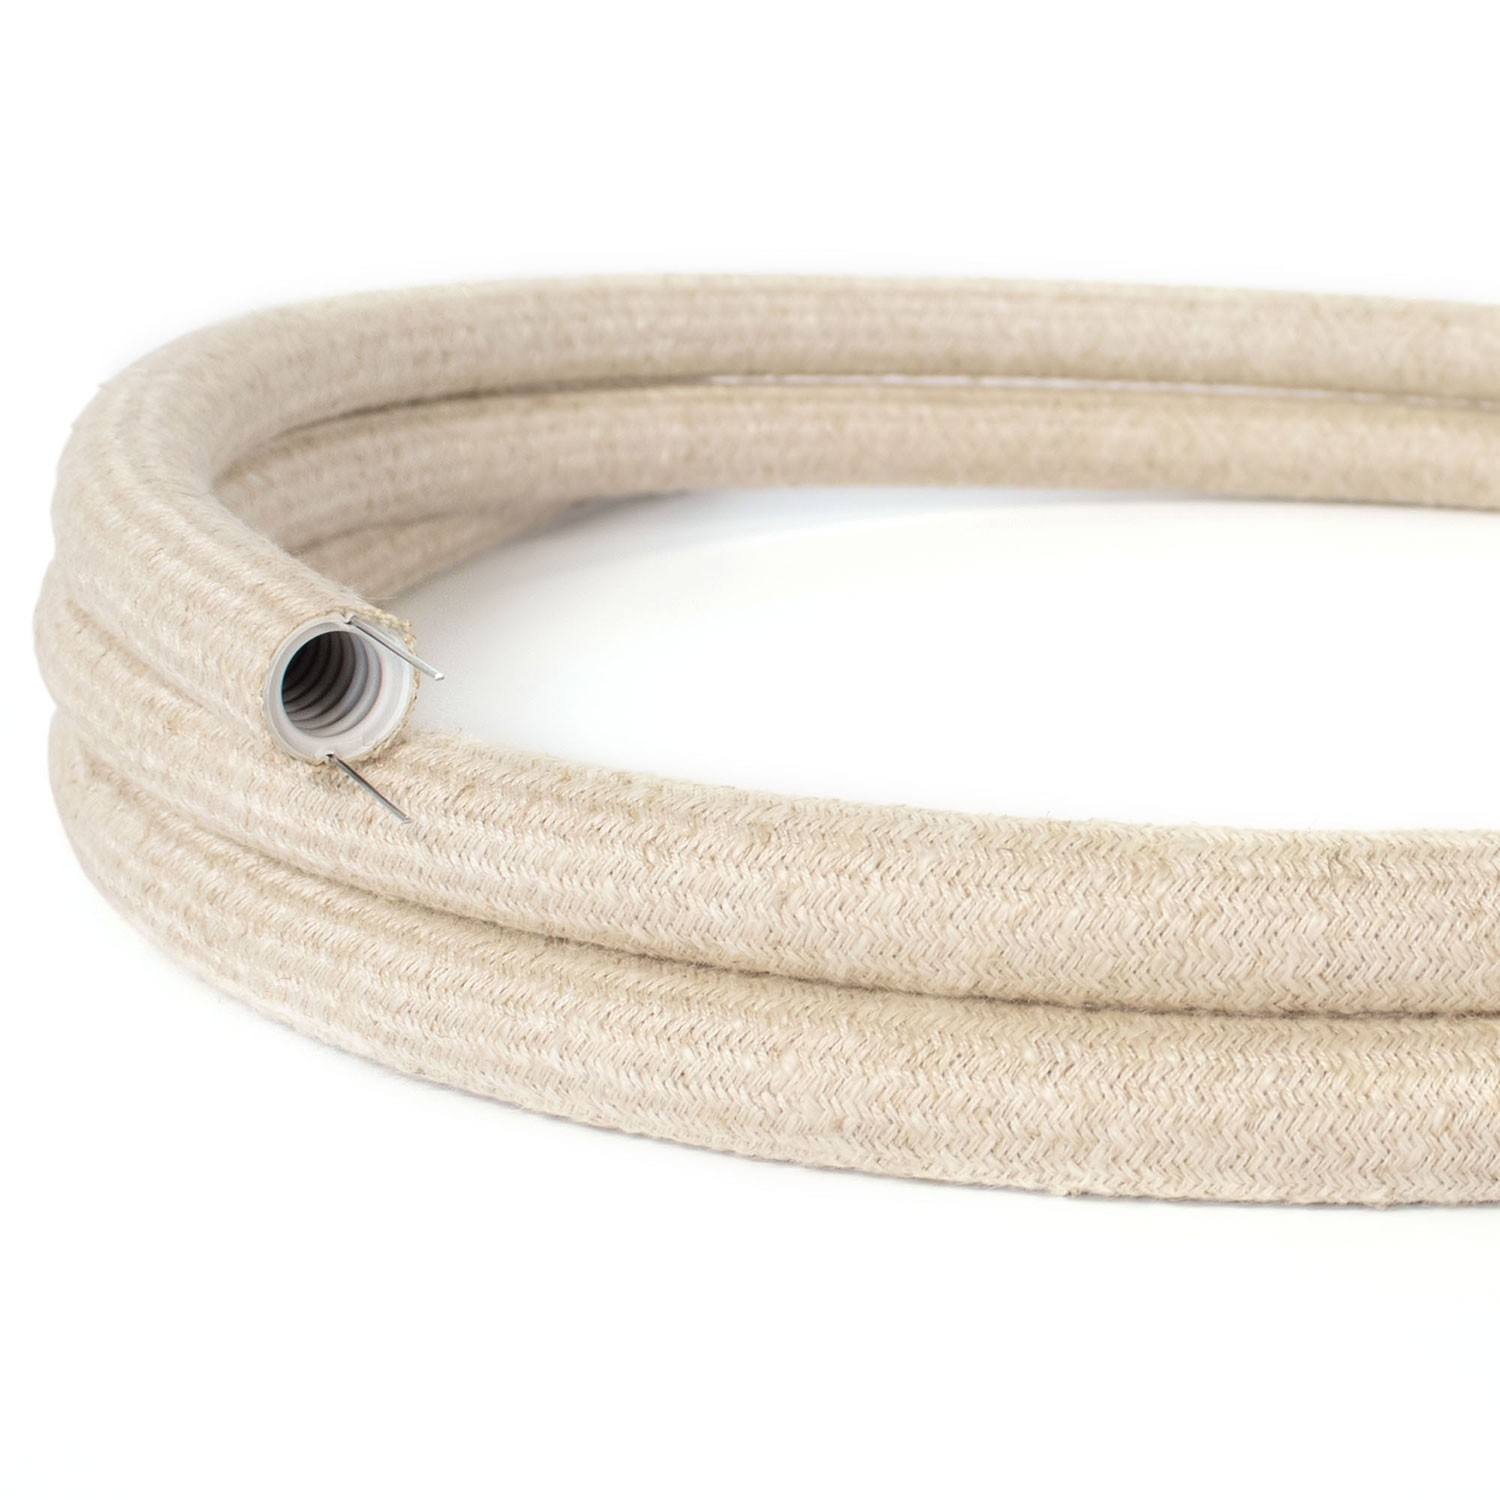 Creative-Tube flexible conduit, Neutral Natural Linen (RN01) fabric covering, 20 mm diameter